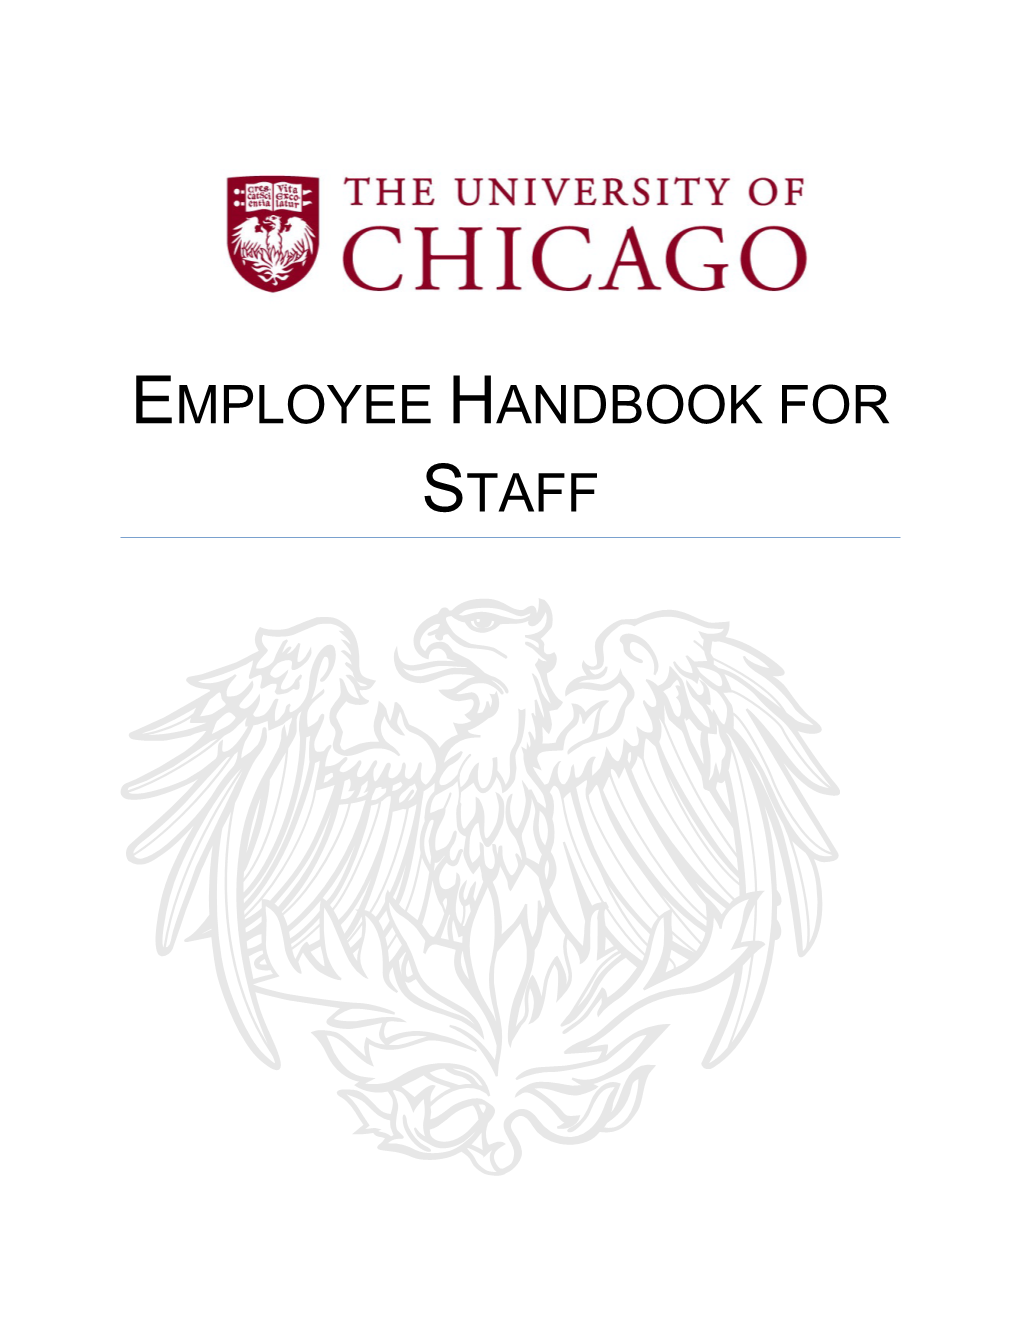 Employee Handbook for Staff